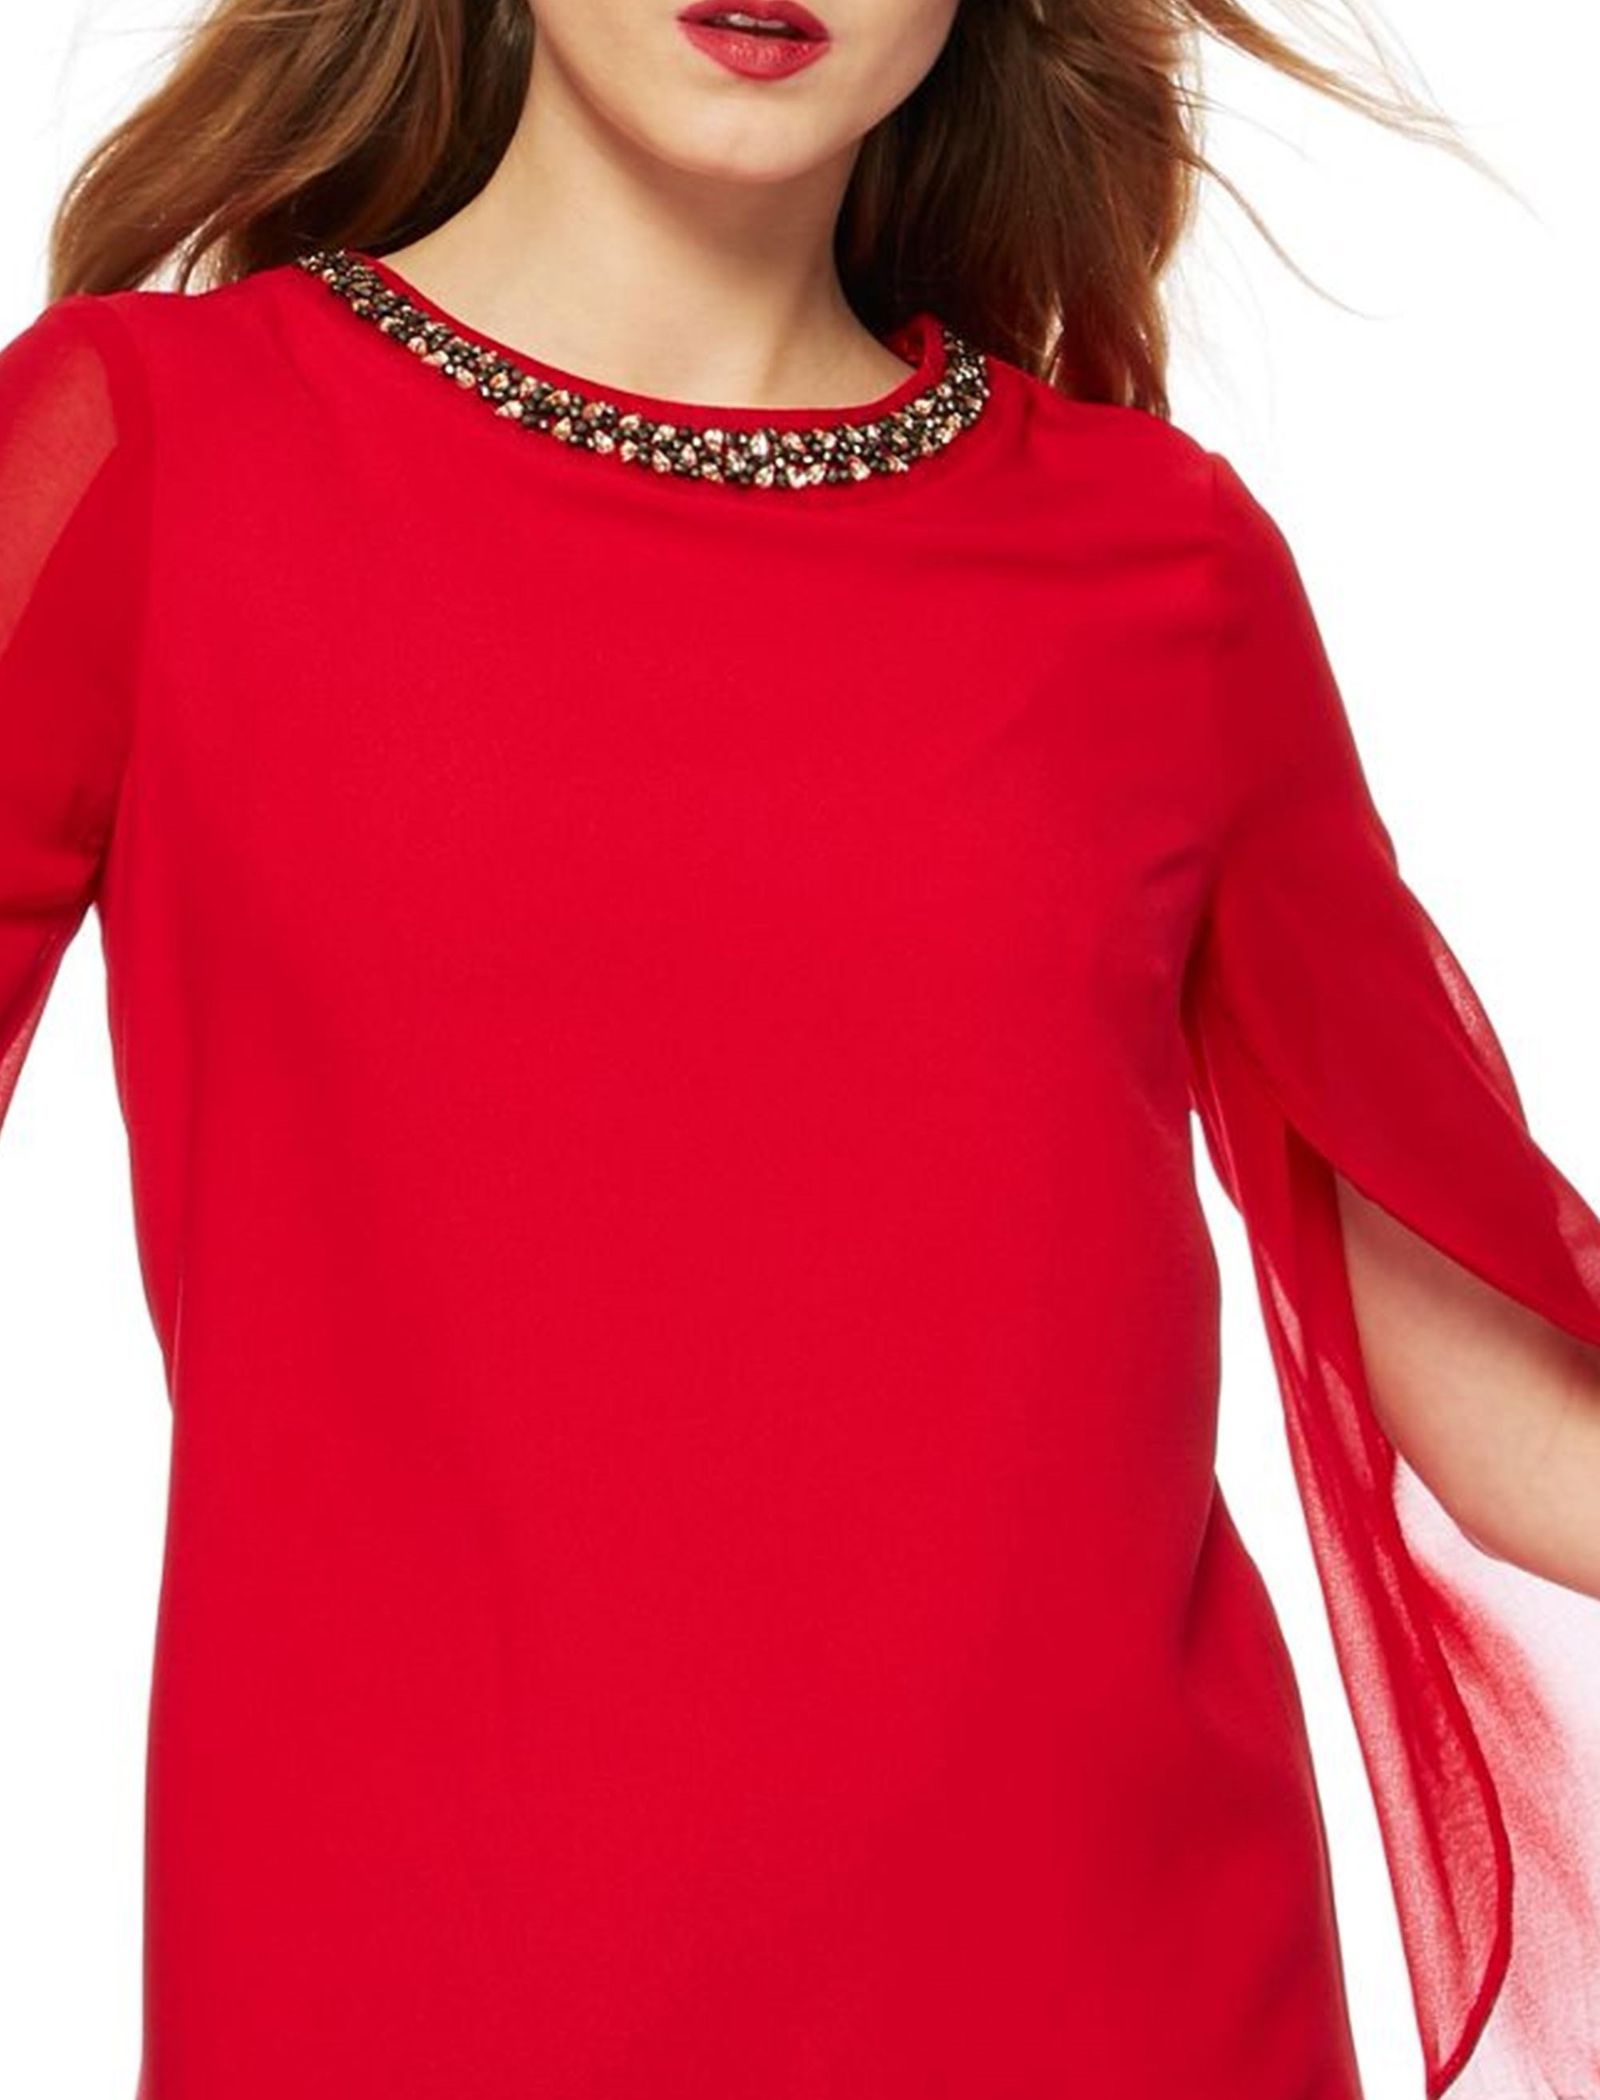 پیراهن کوتاه زنانه - کالکشن - قرمز - 5